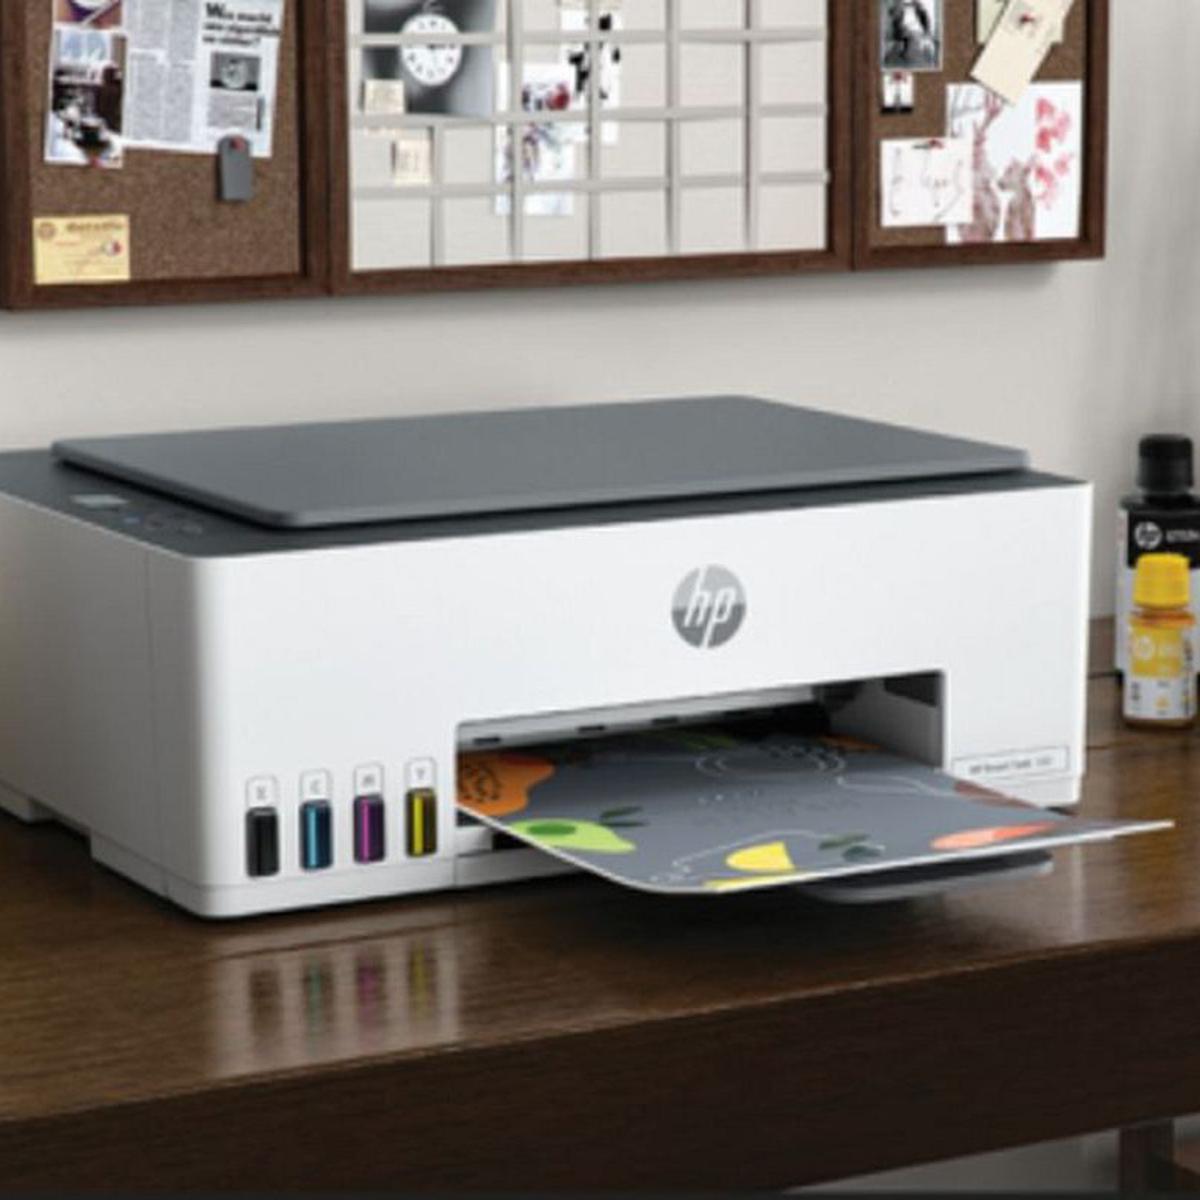 HP Smart Tank Serie 580, la impresora que te ayuda con tu